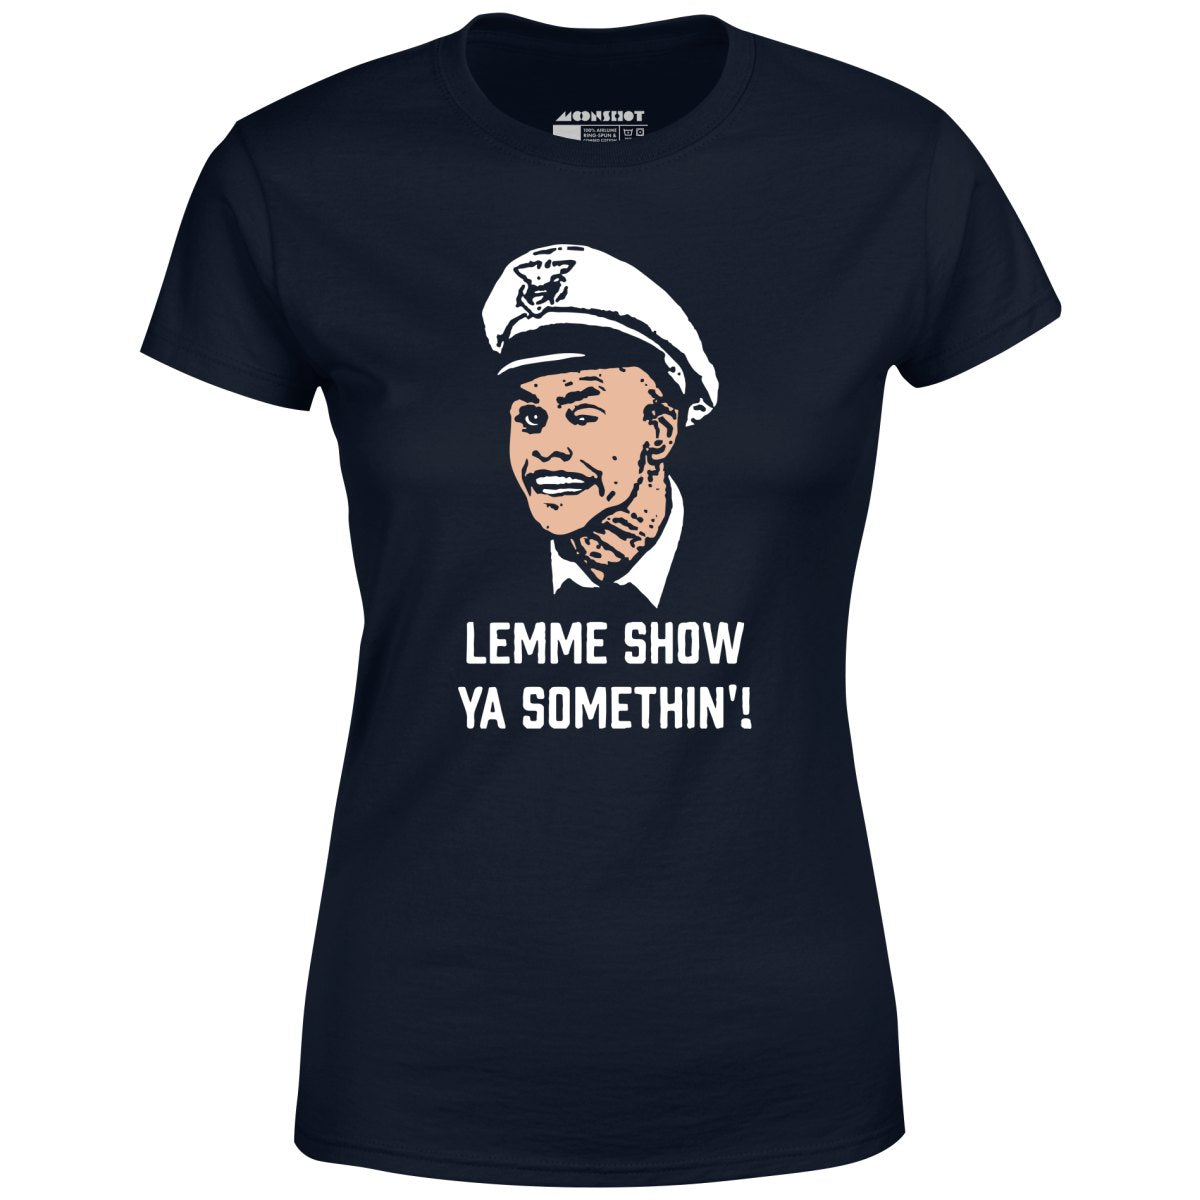 Lemme Show Ya Somethin'! - Women's T-Shirt